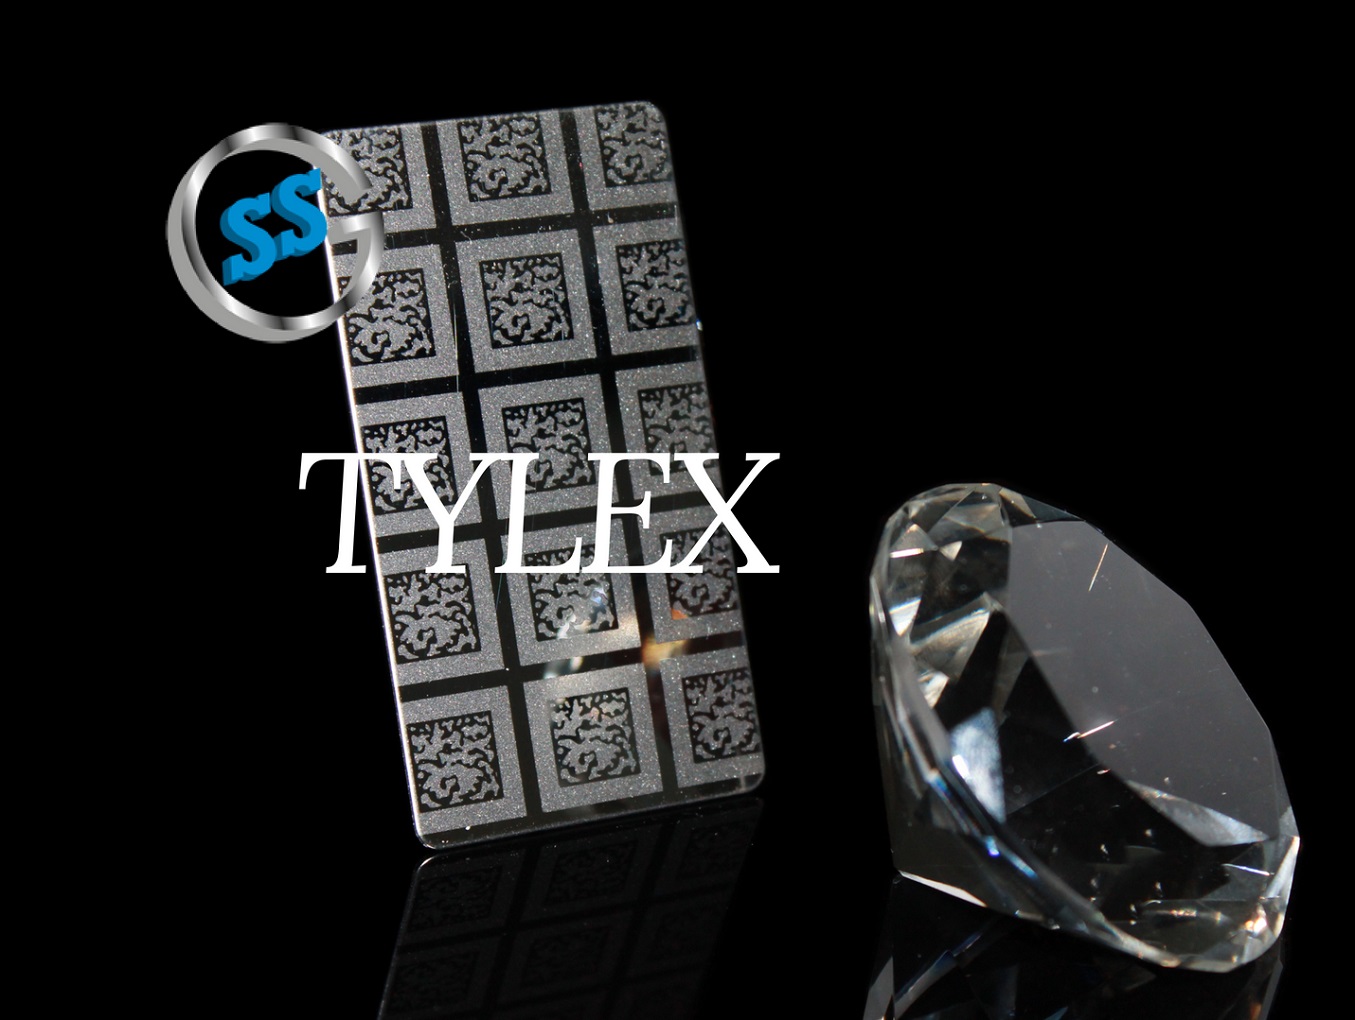 inox MetalArt, inox SuperMirror MetalArt, MetalArt Tylex